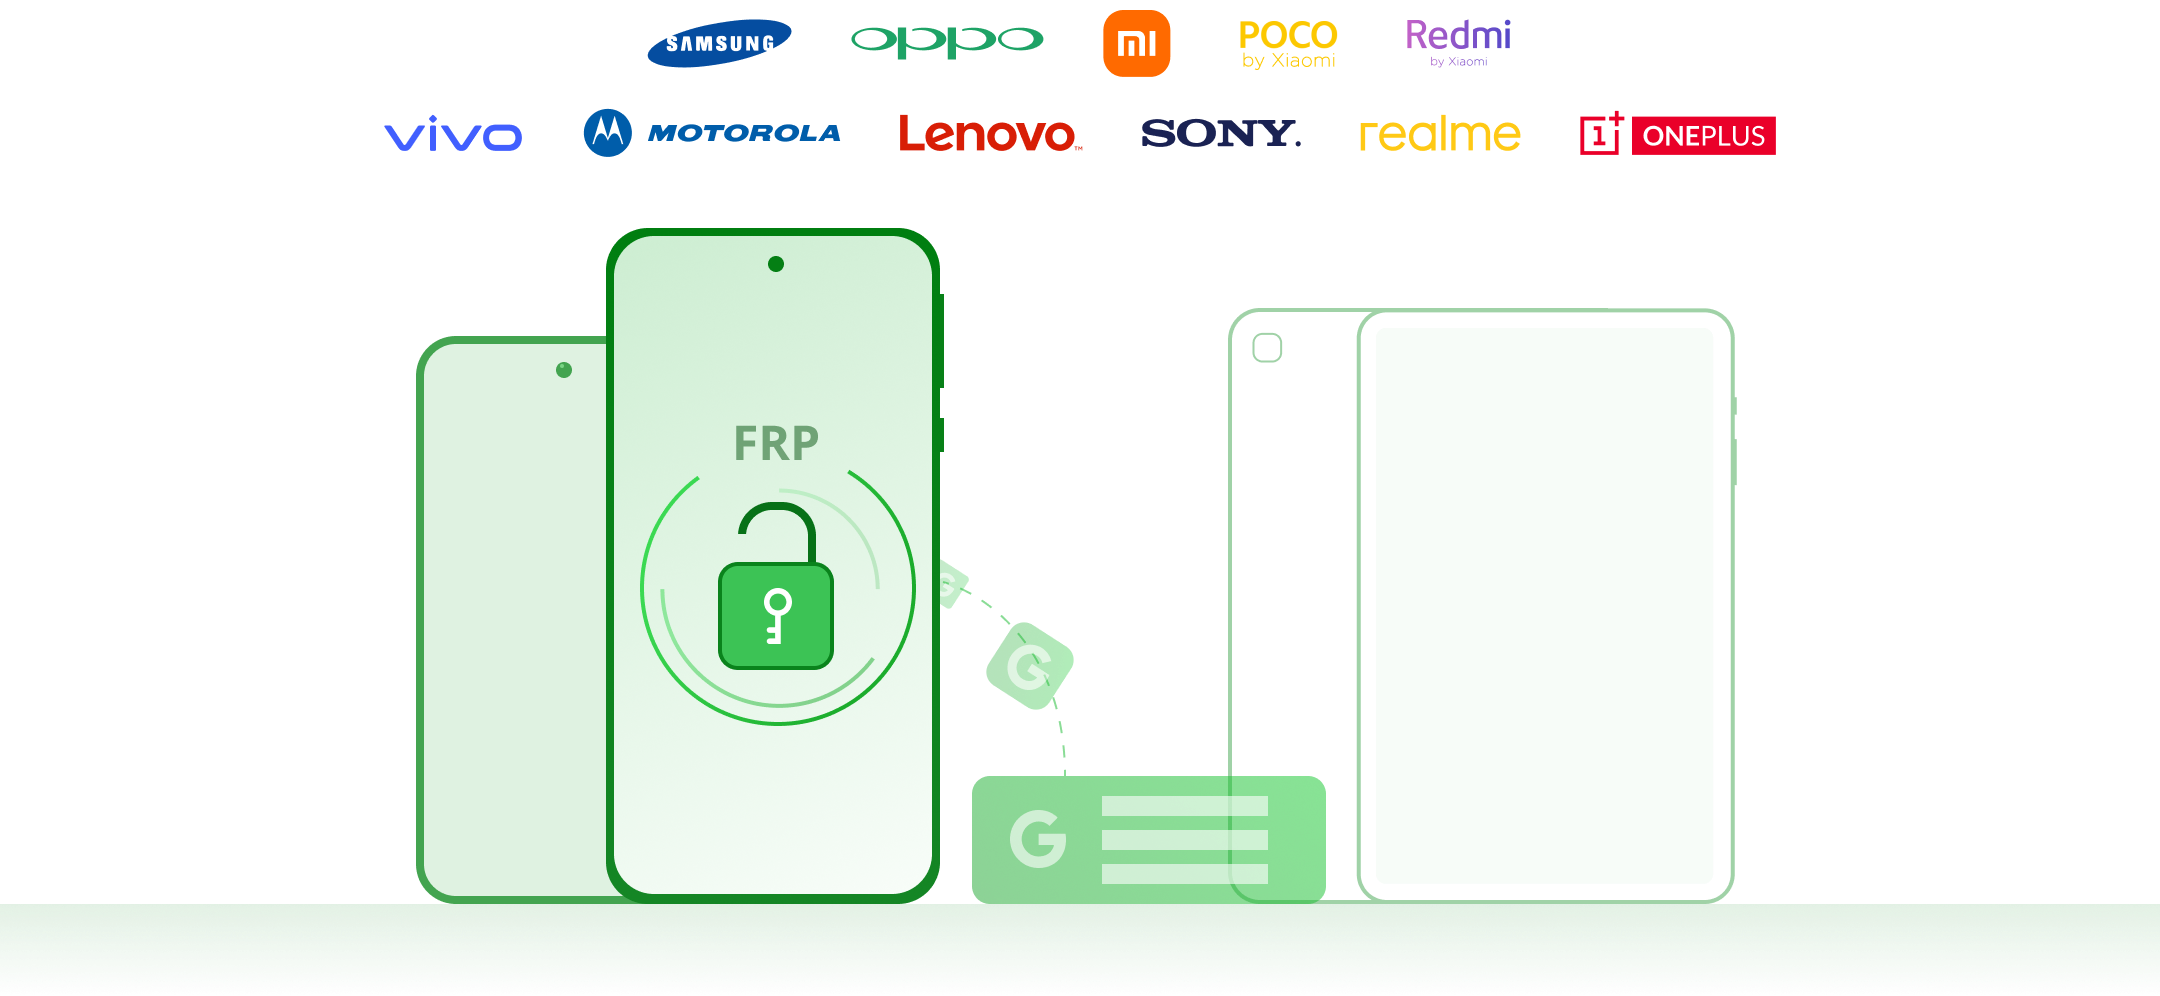 Bypassa i blocchi FRP di Android senza password